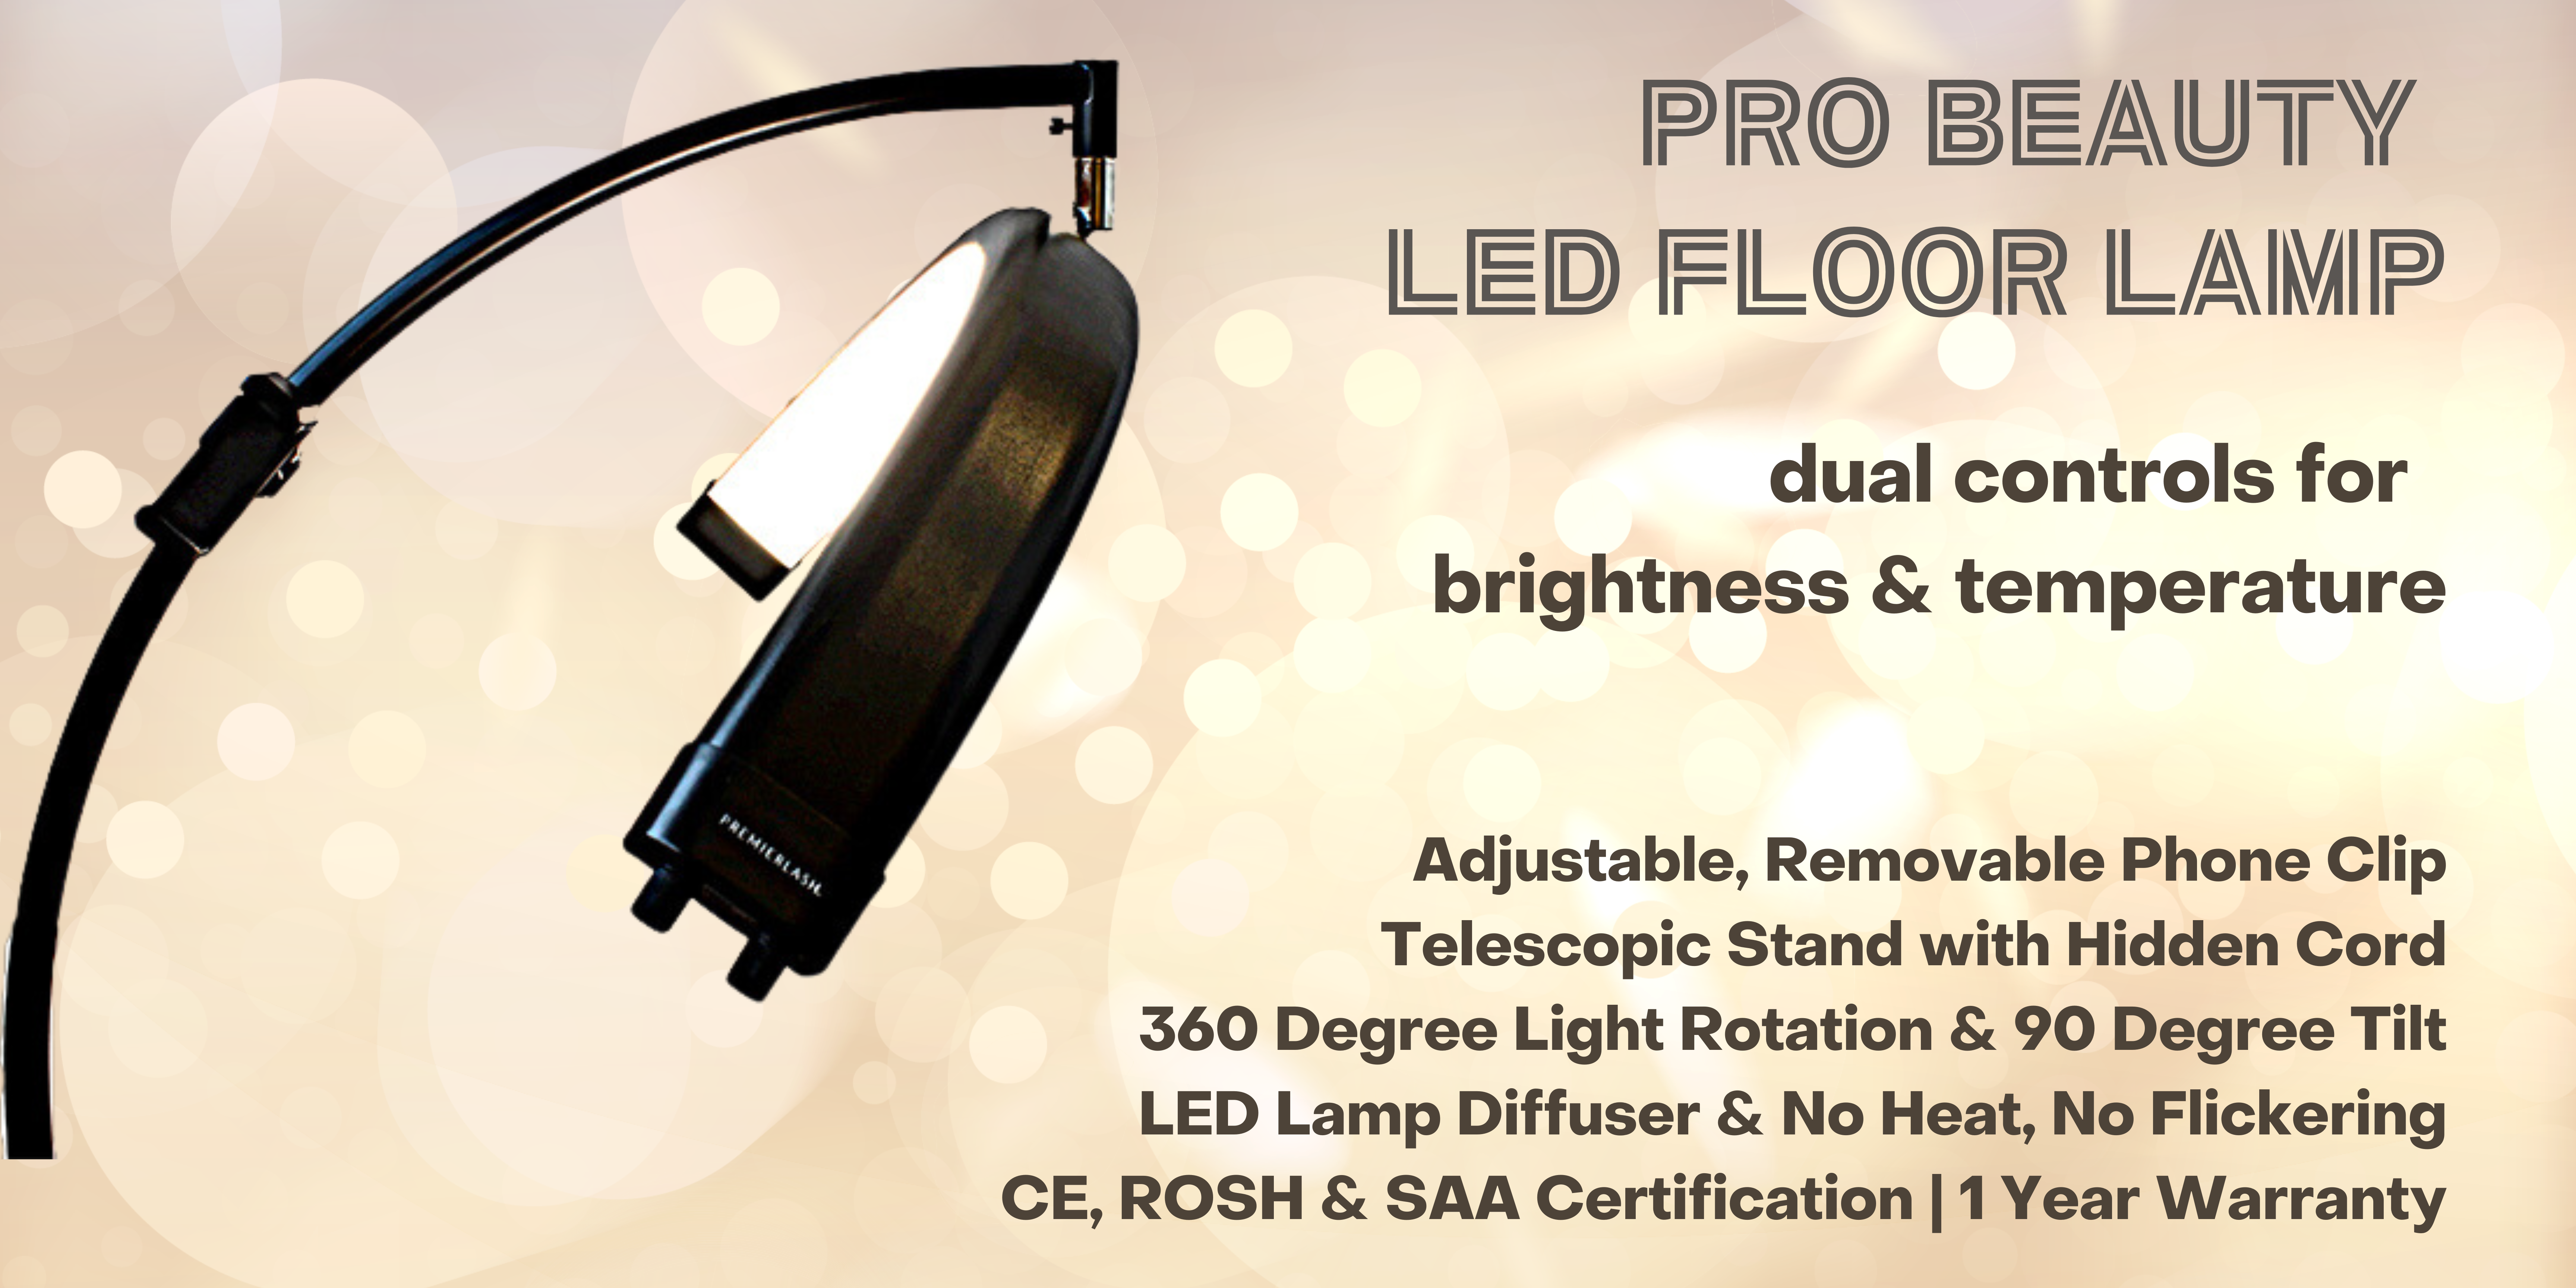 Pro Beauty LED Floor Lamp